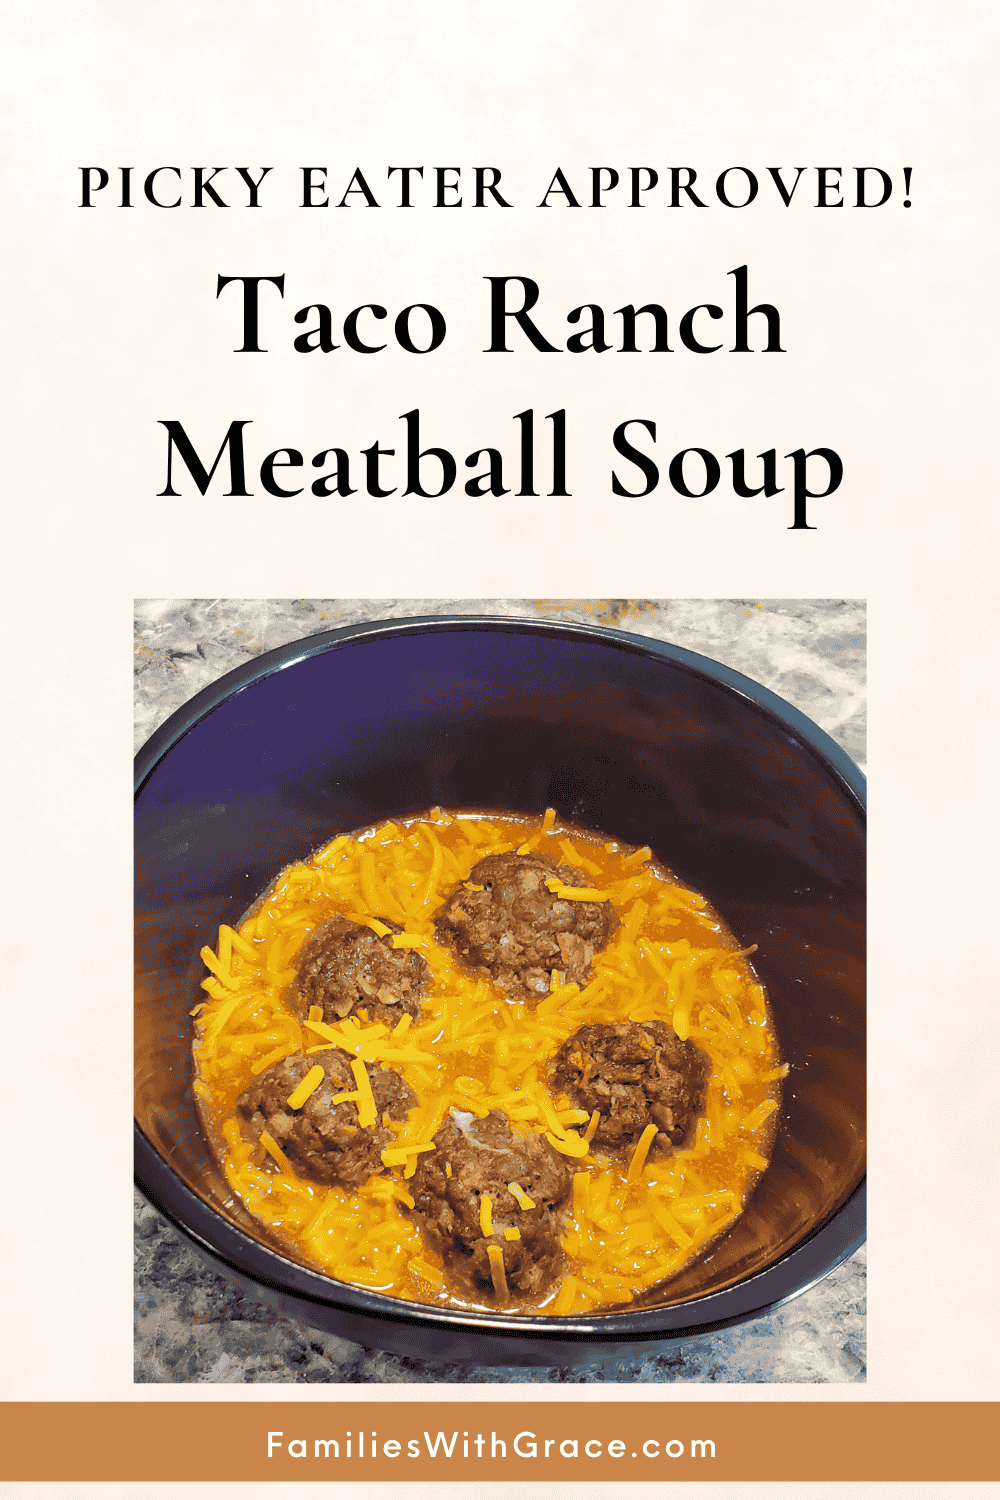 Taco ranch meatball soup